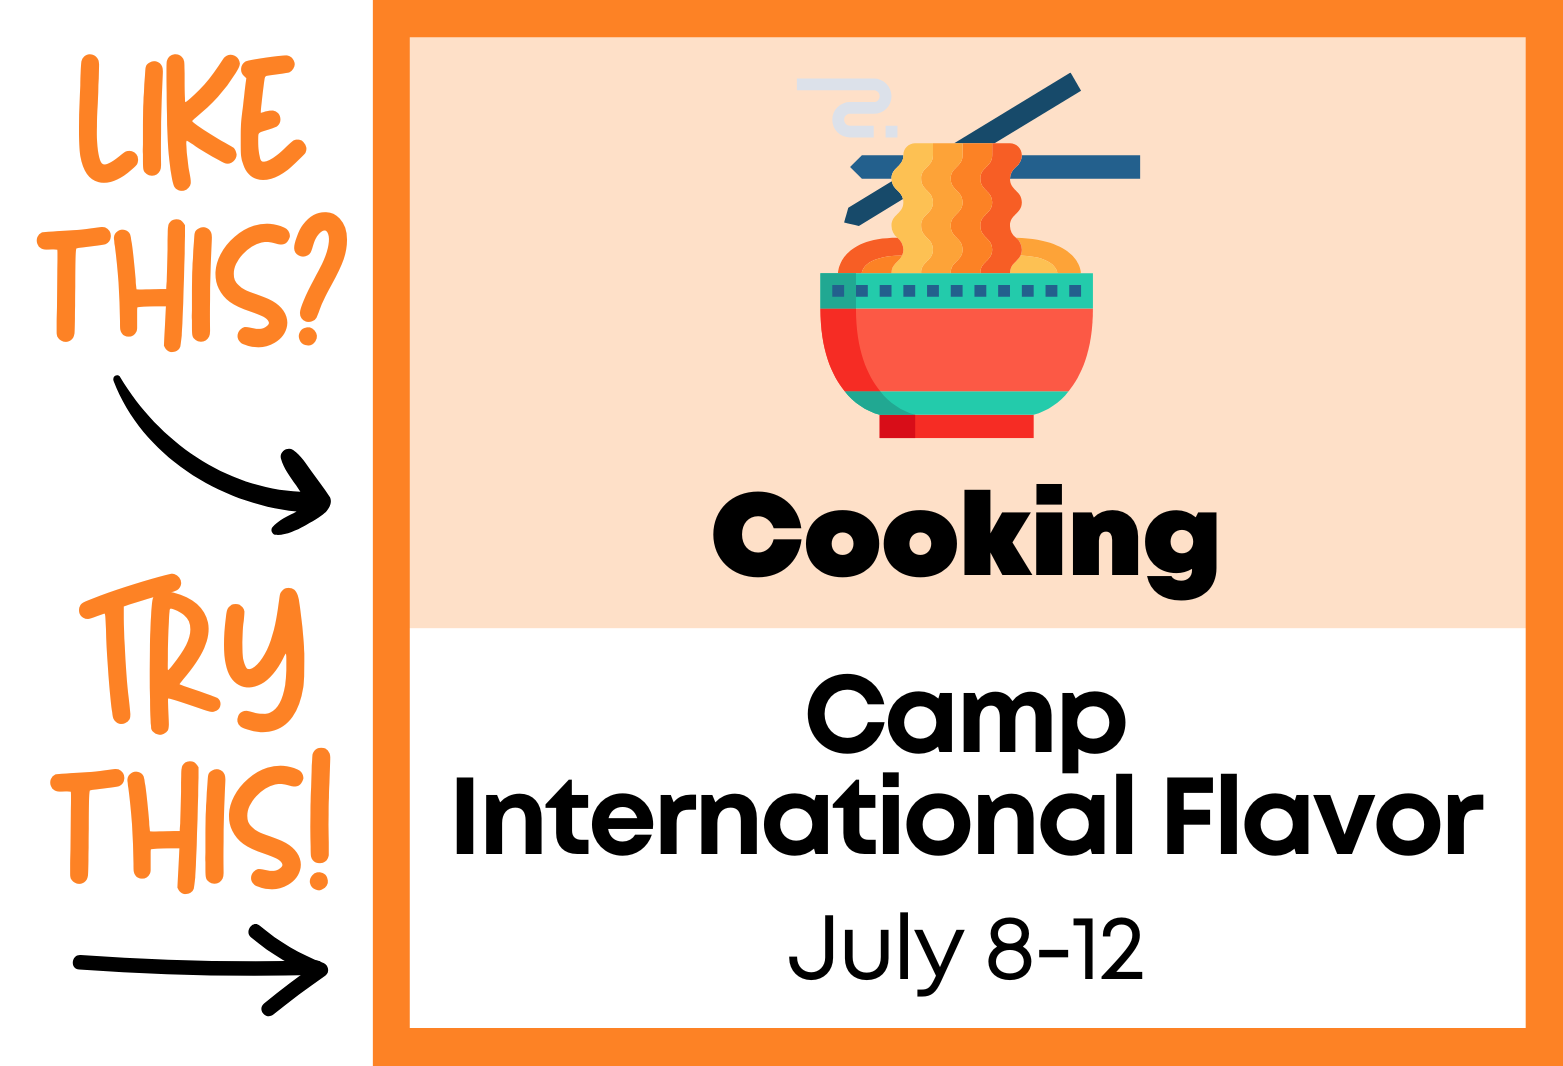 Camp International Flavor, July 8-12